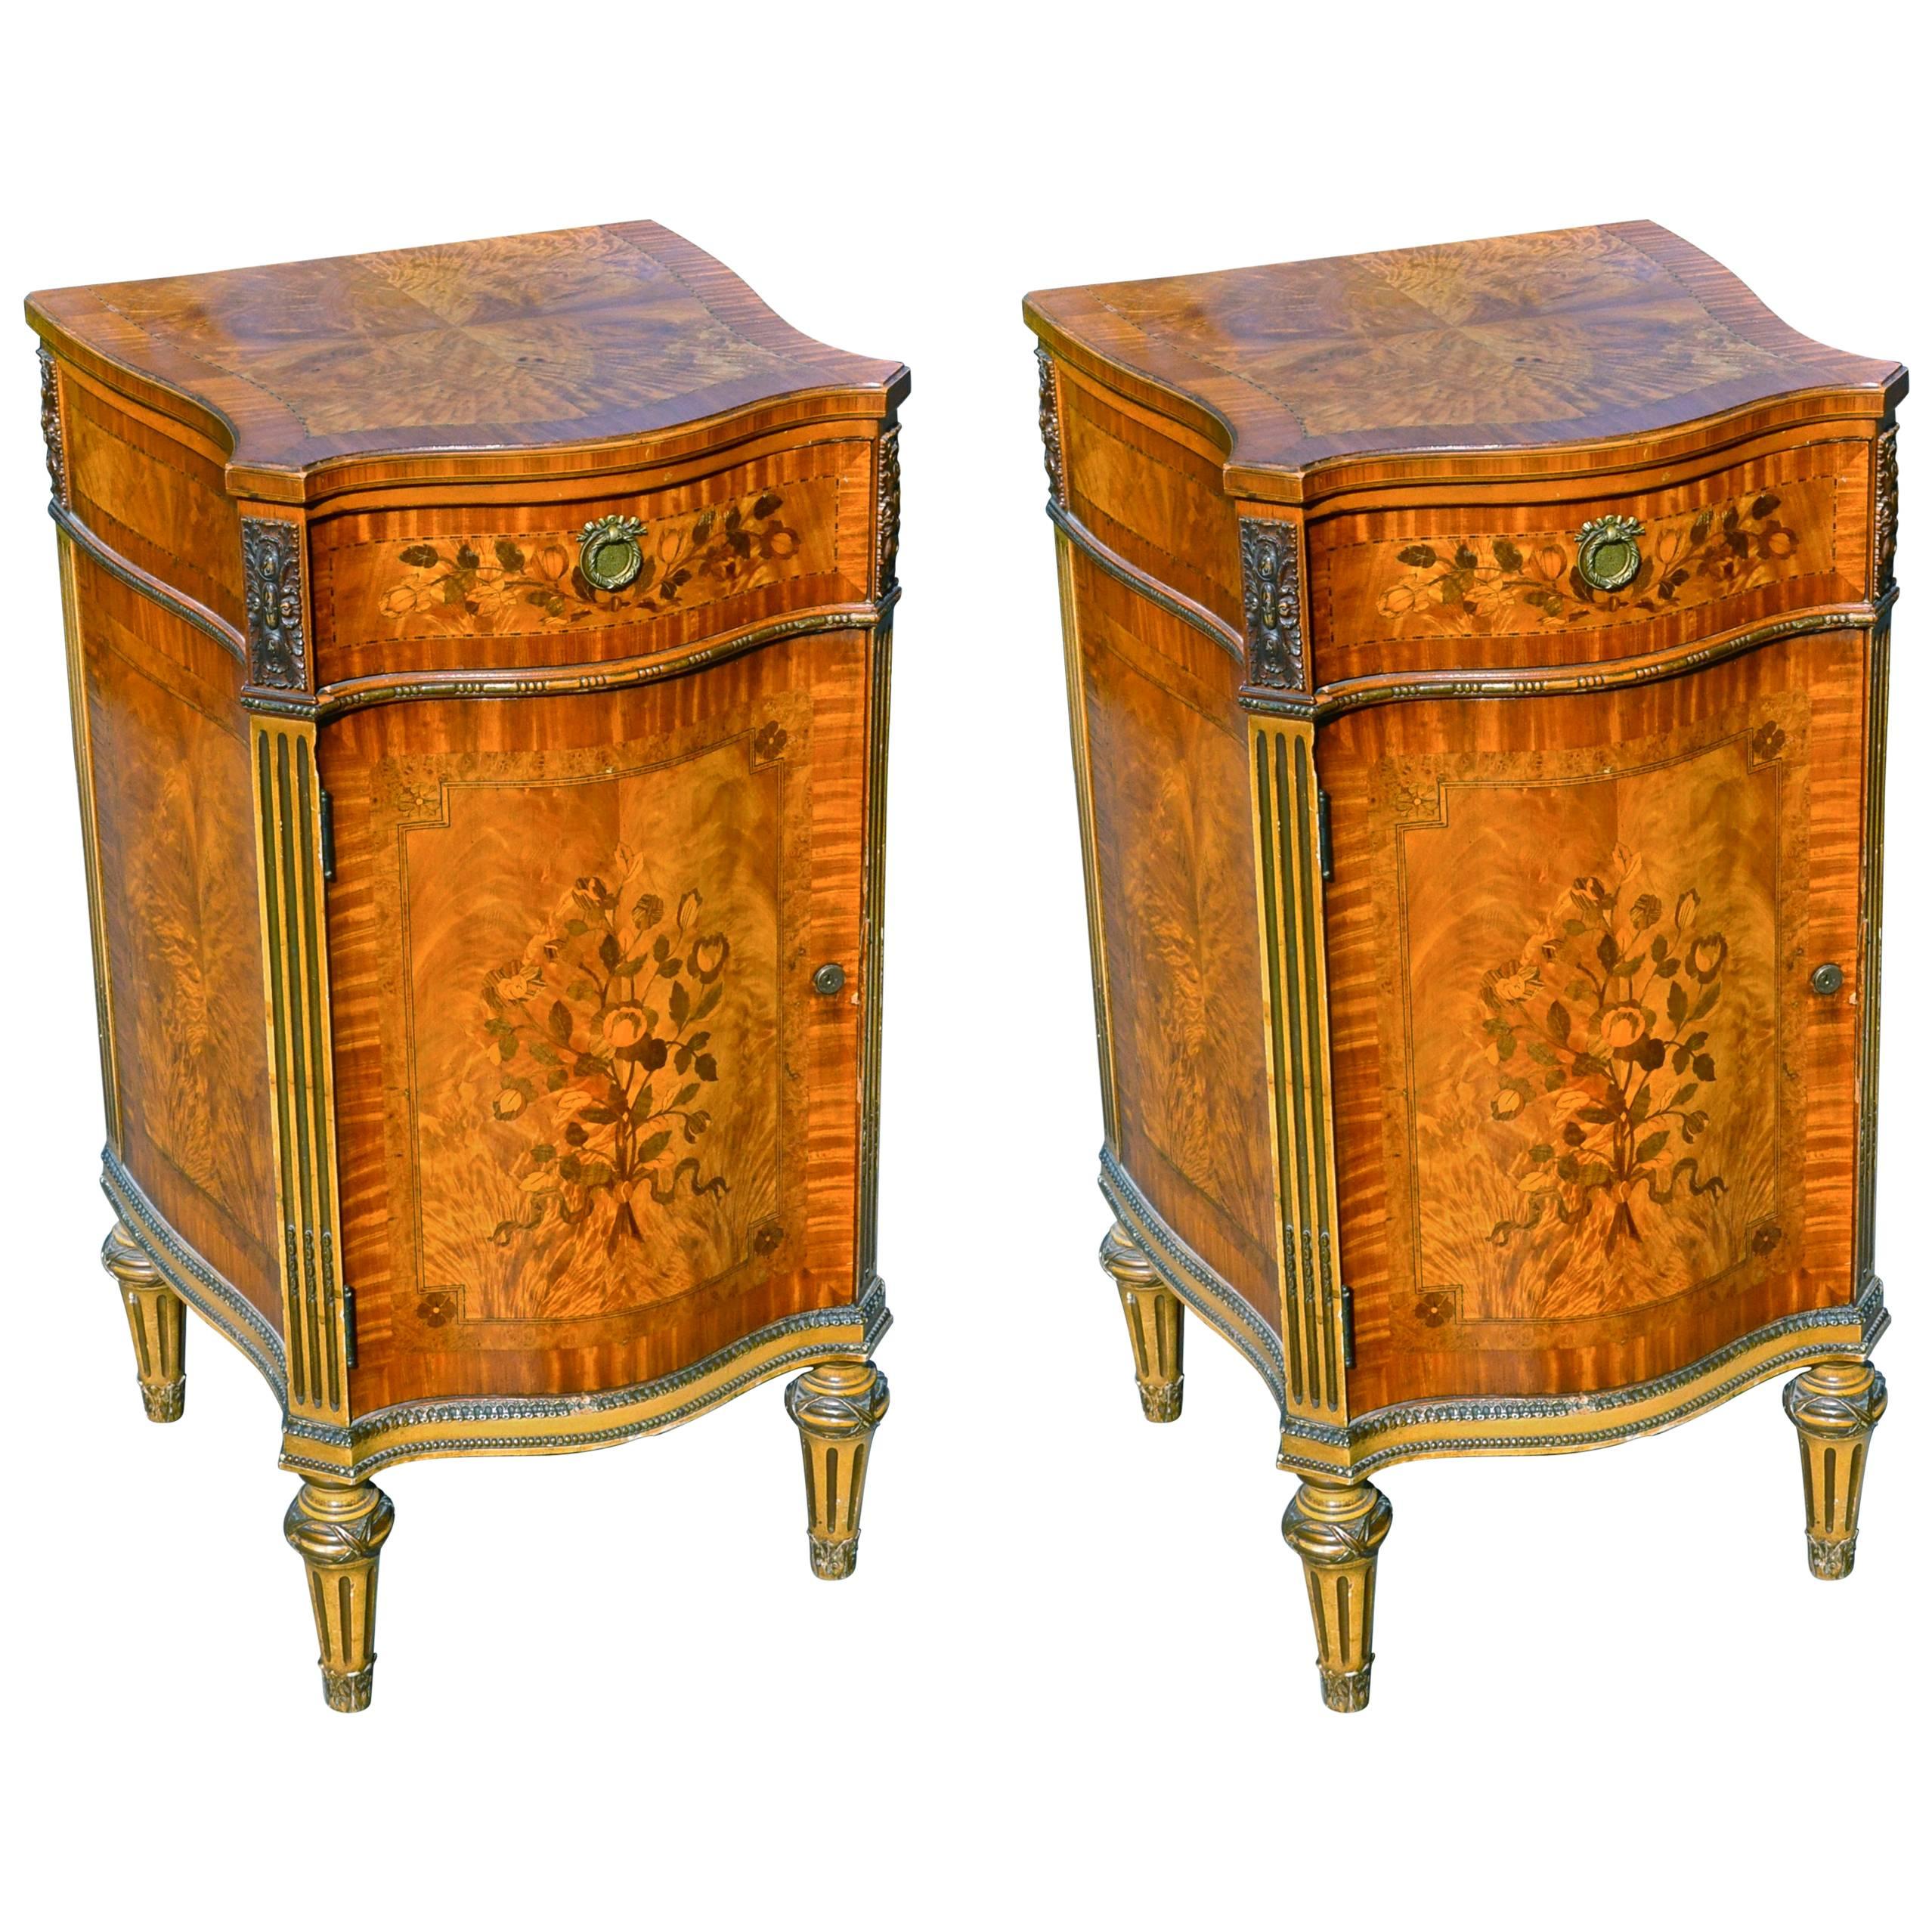 Pair of Edwardian Satinwood Inlaid Cabinets